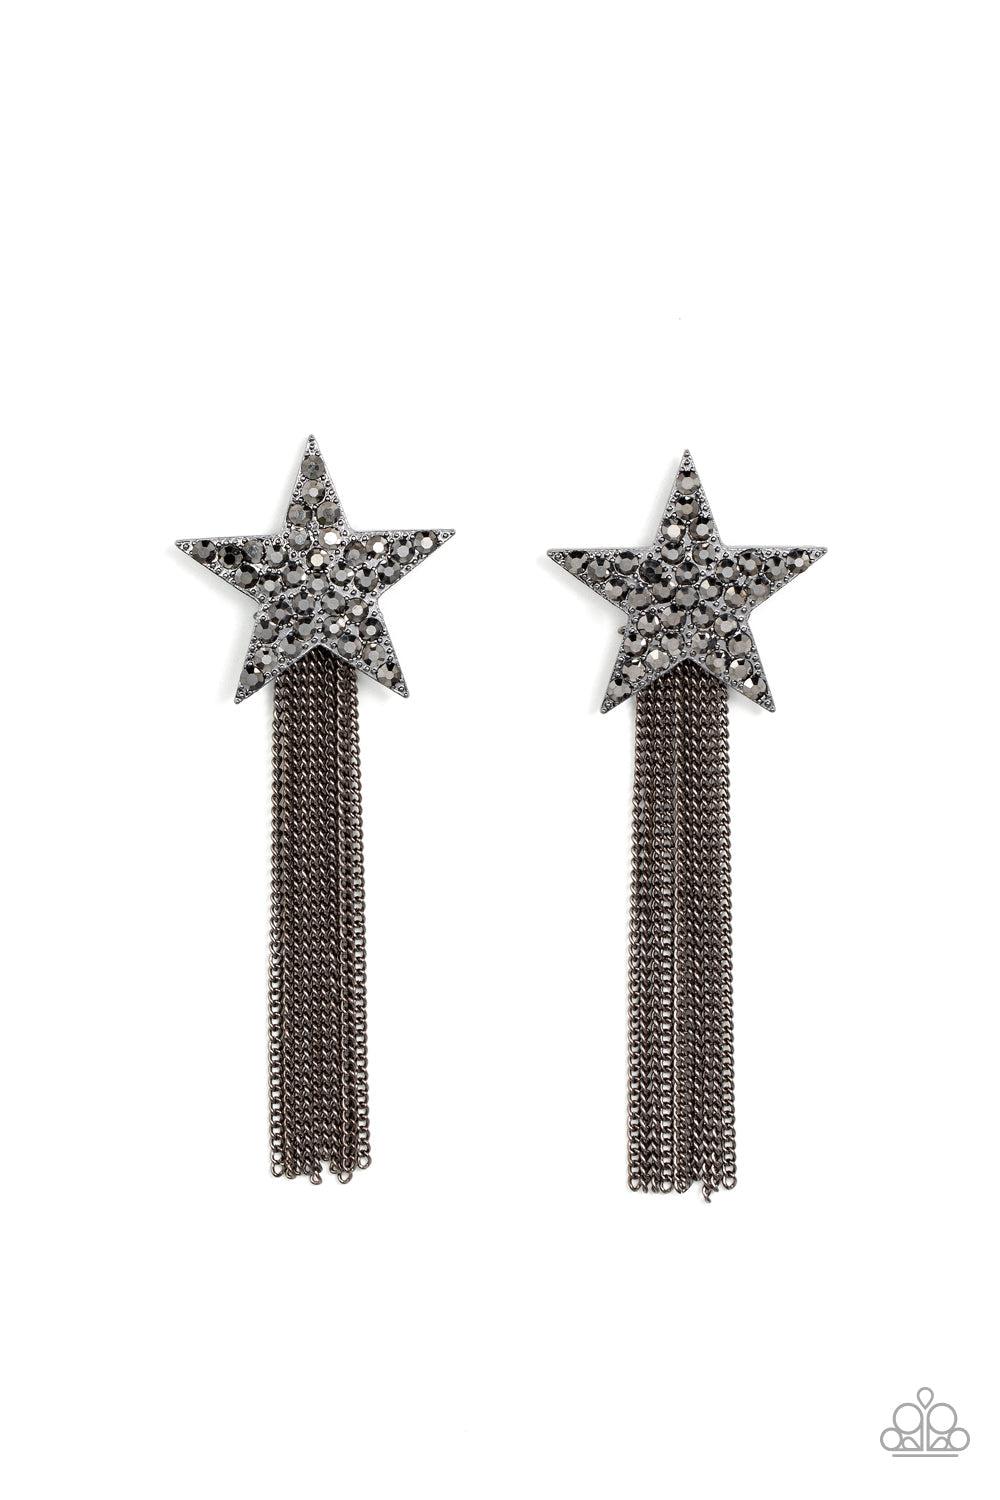 Superstar Solo Black & Hematite Rhinestone Earrings - Paparazzi Accessories- lightbox - CarasShop.com - $5 Jewelry by Cara Jewels